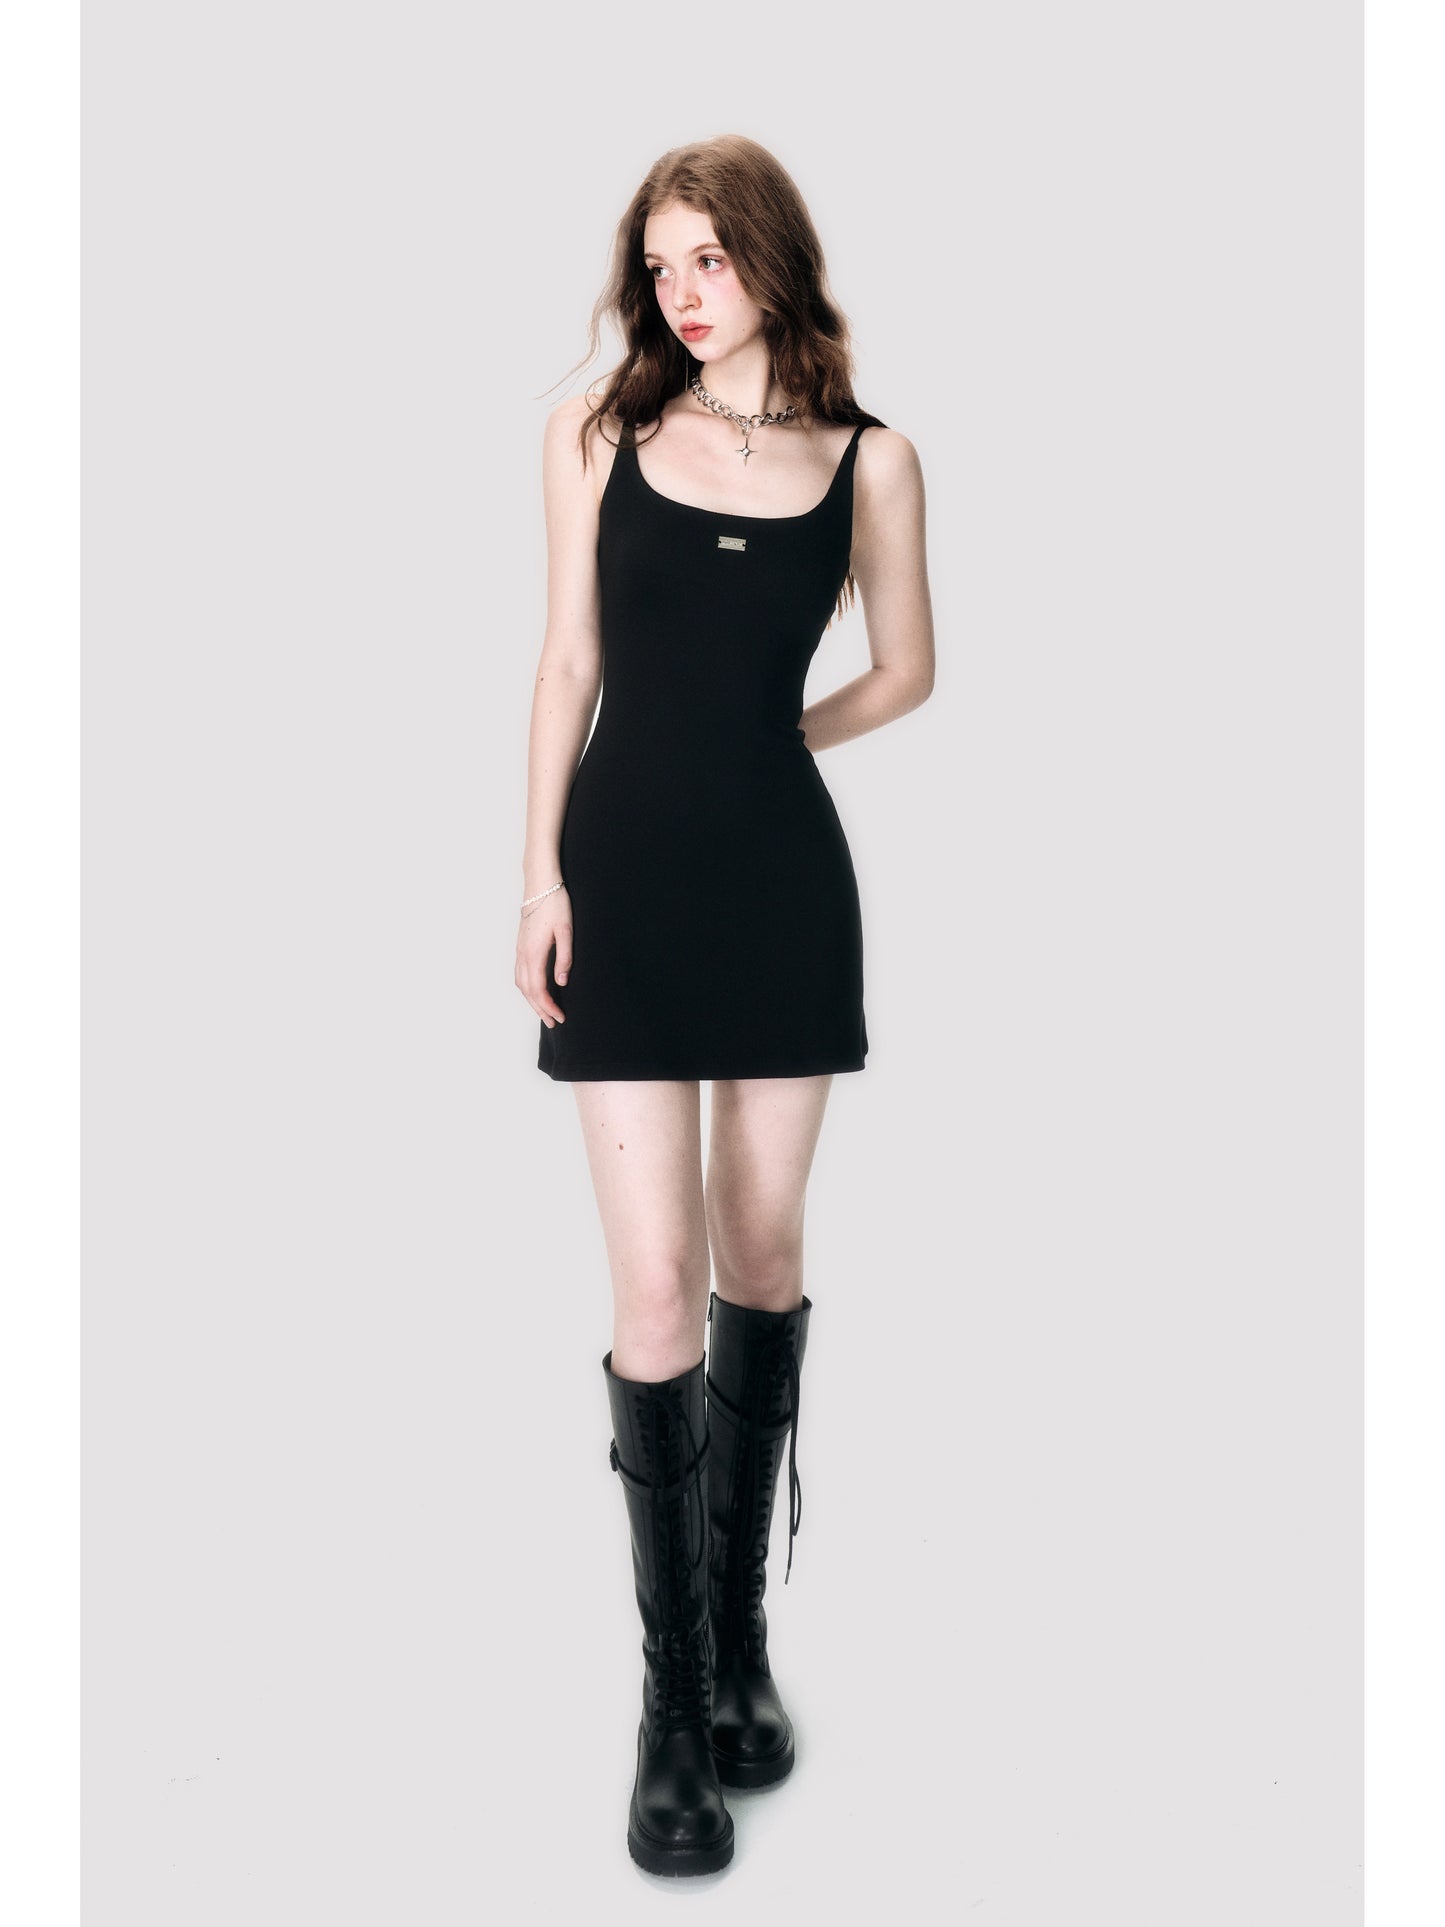 Black Knitted Sling Dress - Short and Fragile